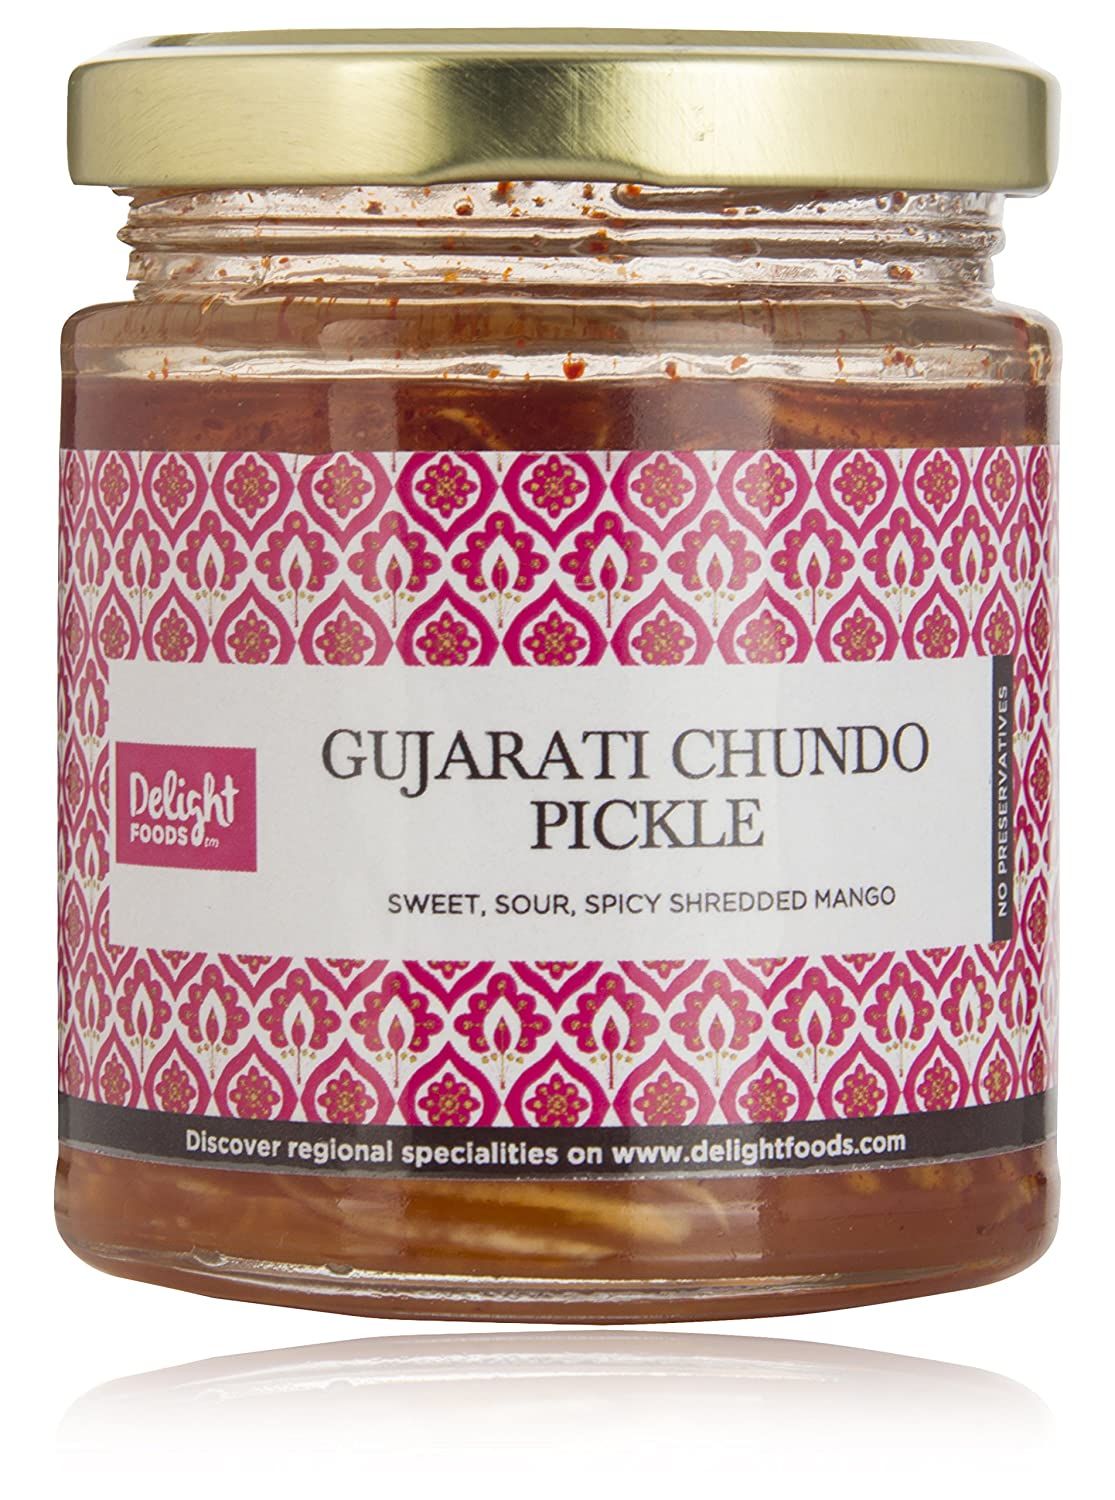 Delight Foods Gujrati Chundo Pickle Image